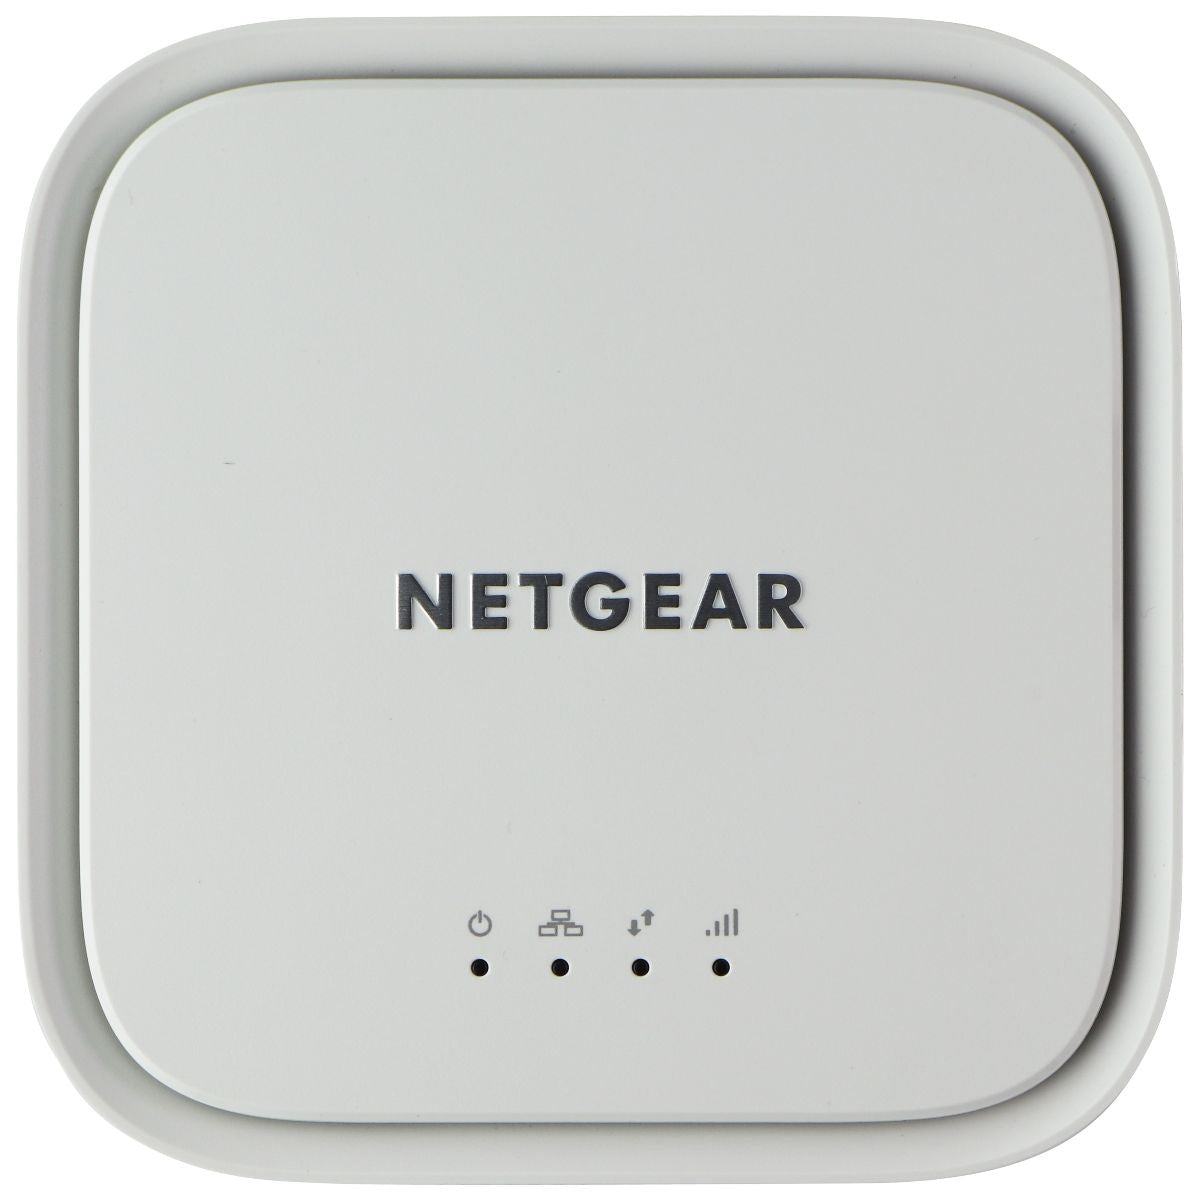 NETGEAR 4G LTE Modem - LM1200, Mobile Broadband